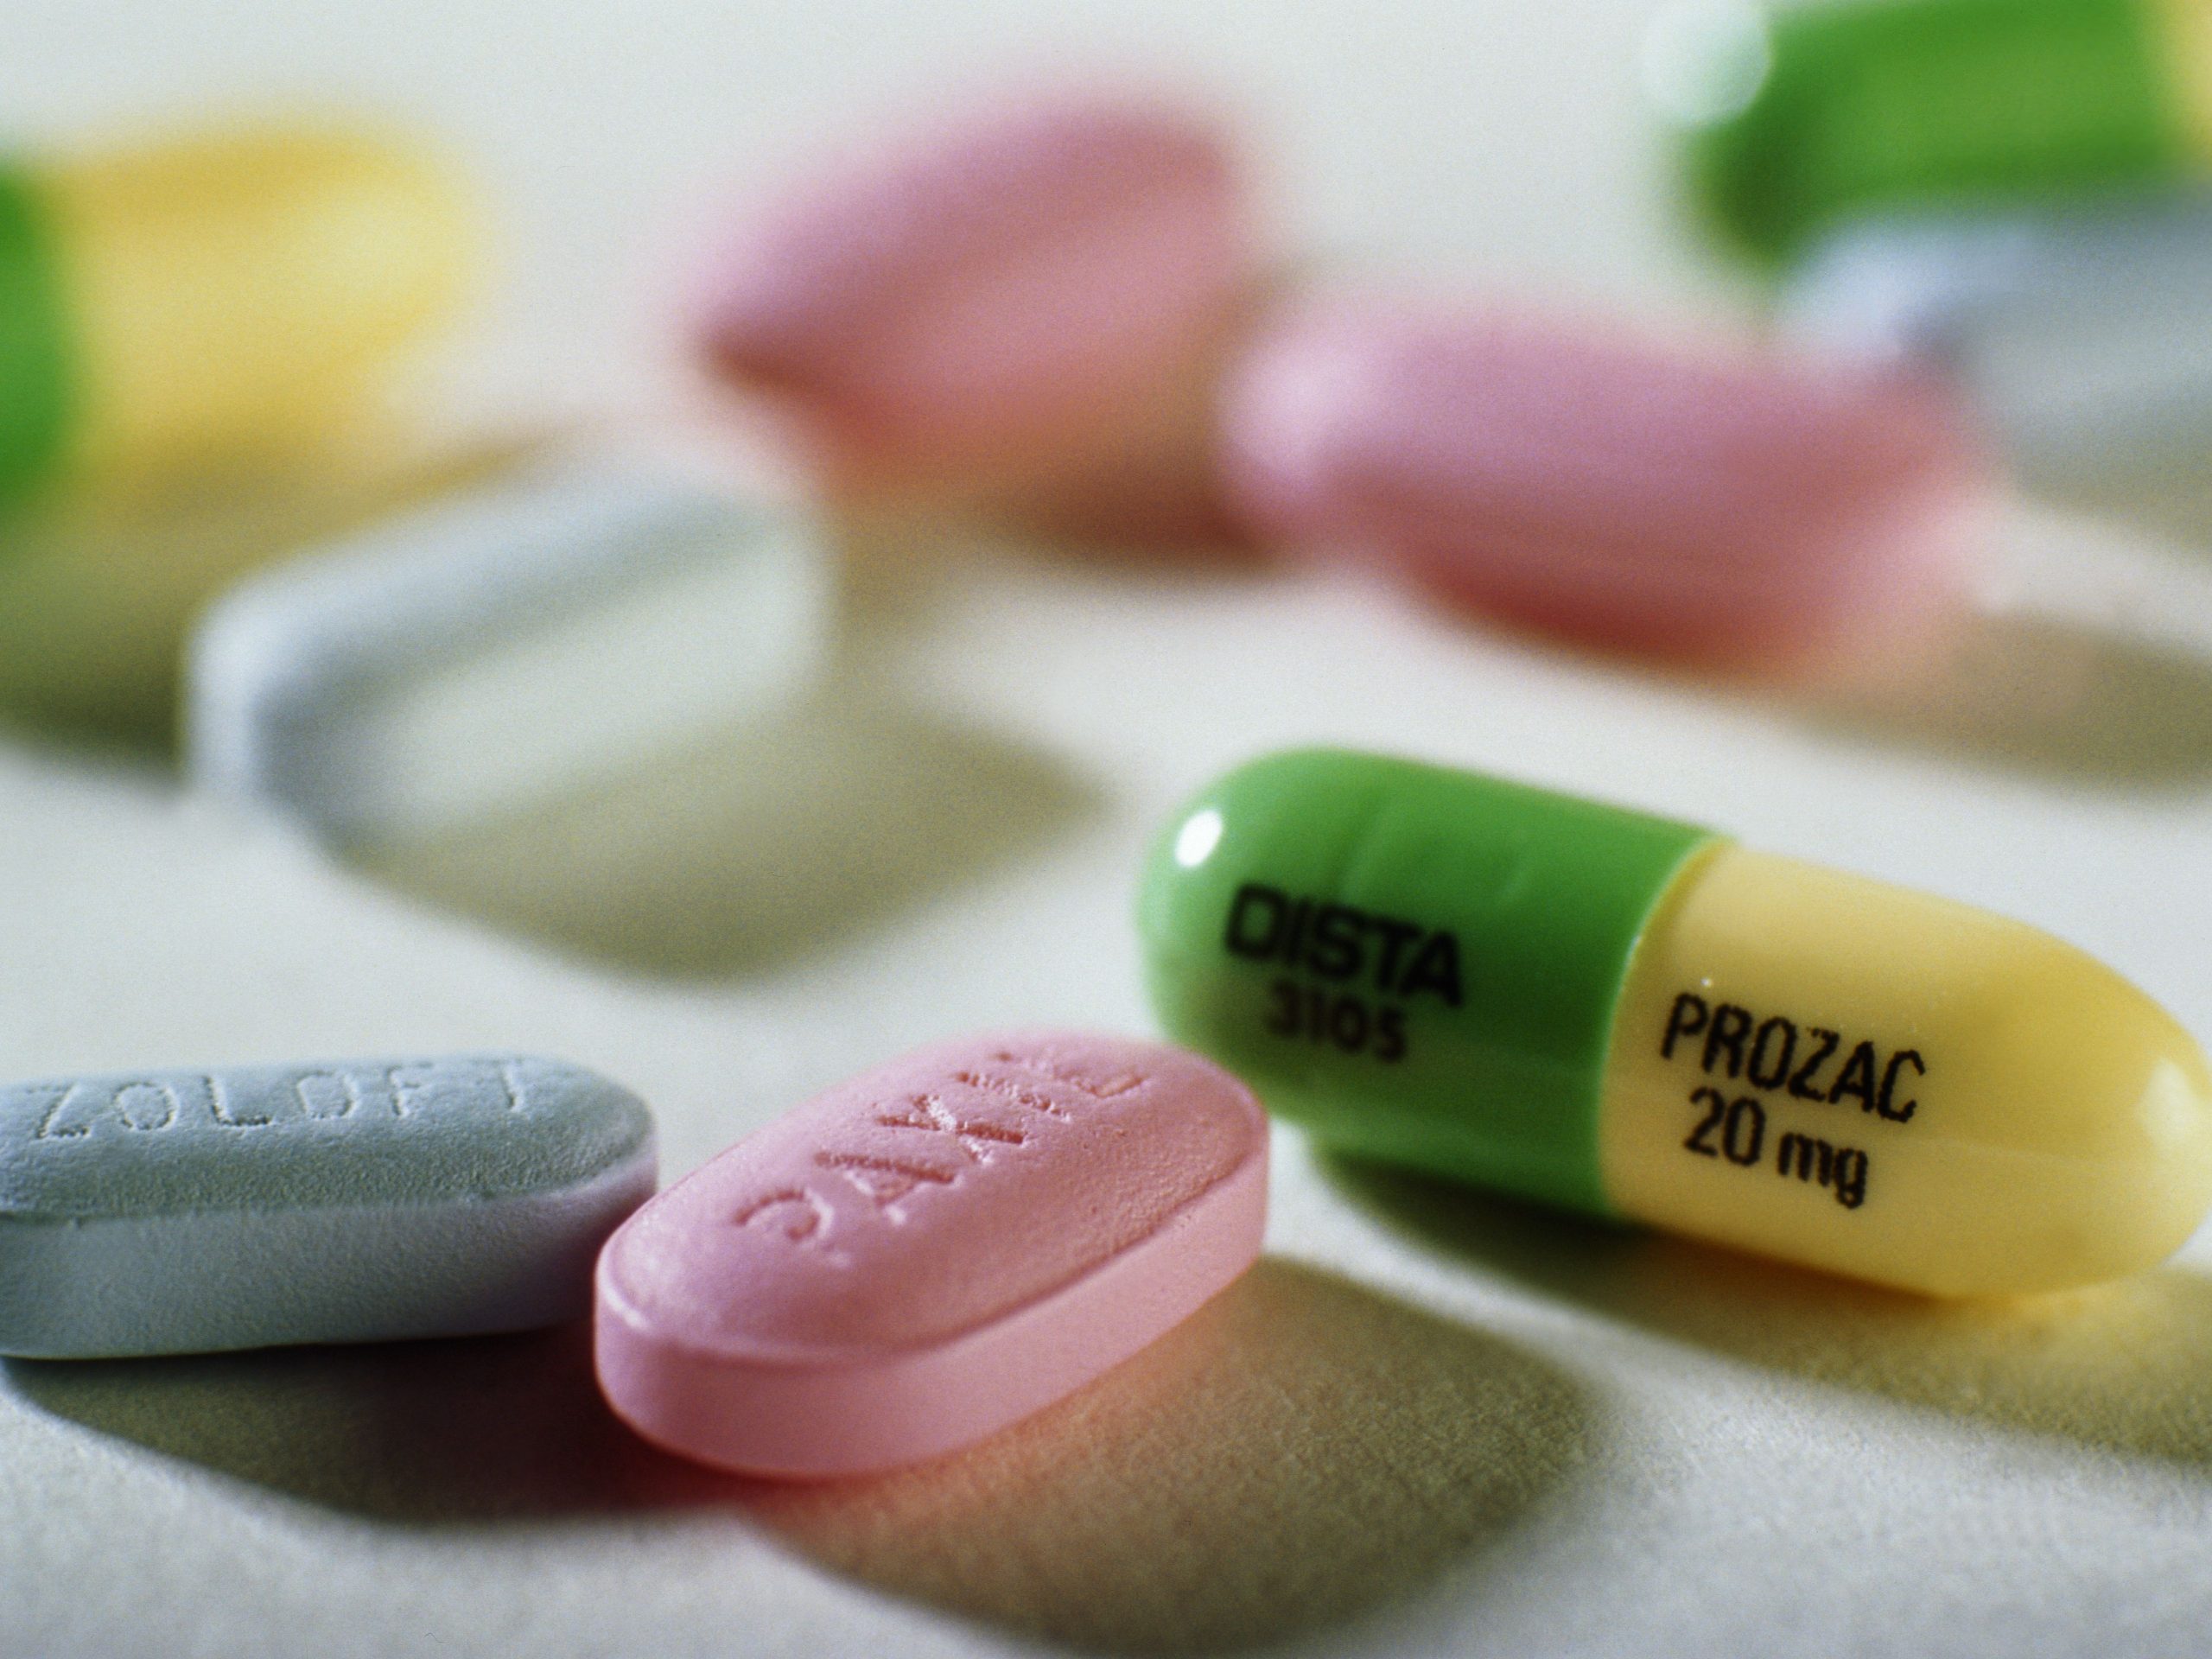 Taking antidepressants is as risky as taking recreational drugs